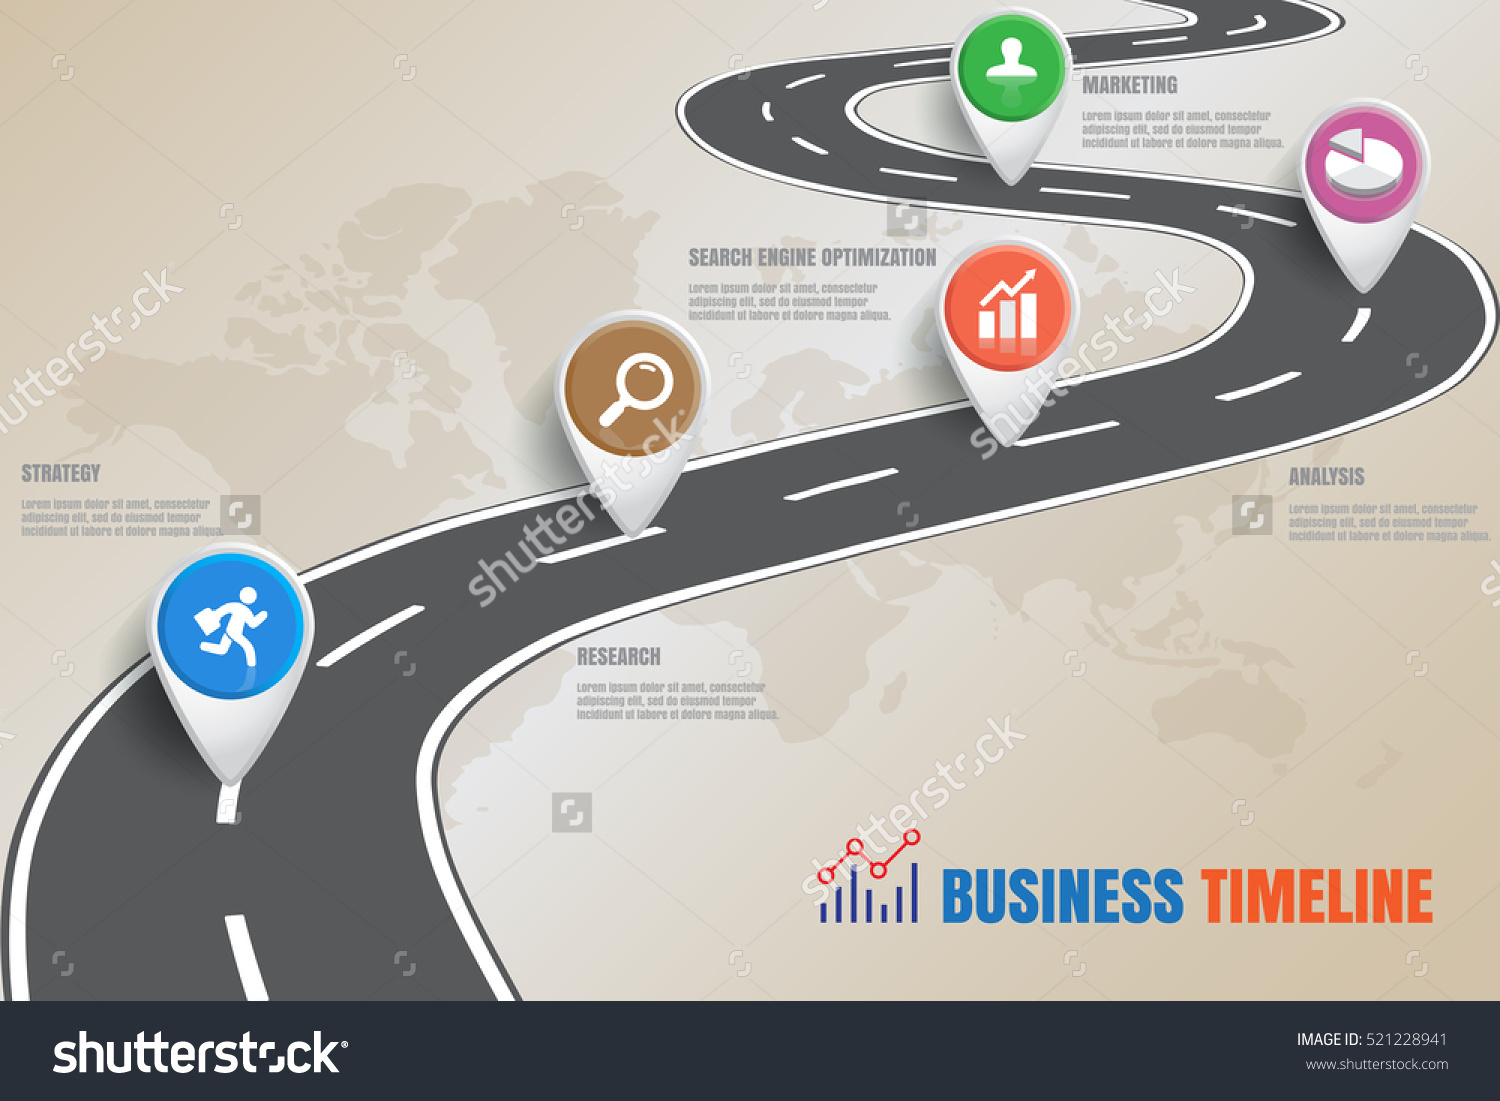 stock vector design template road map business timeline vector illustration 521228941